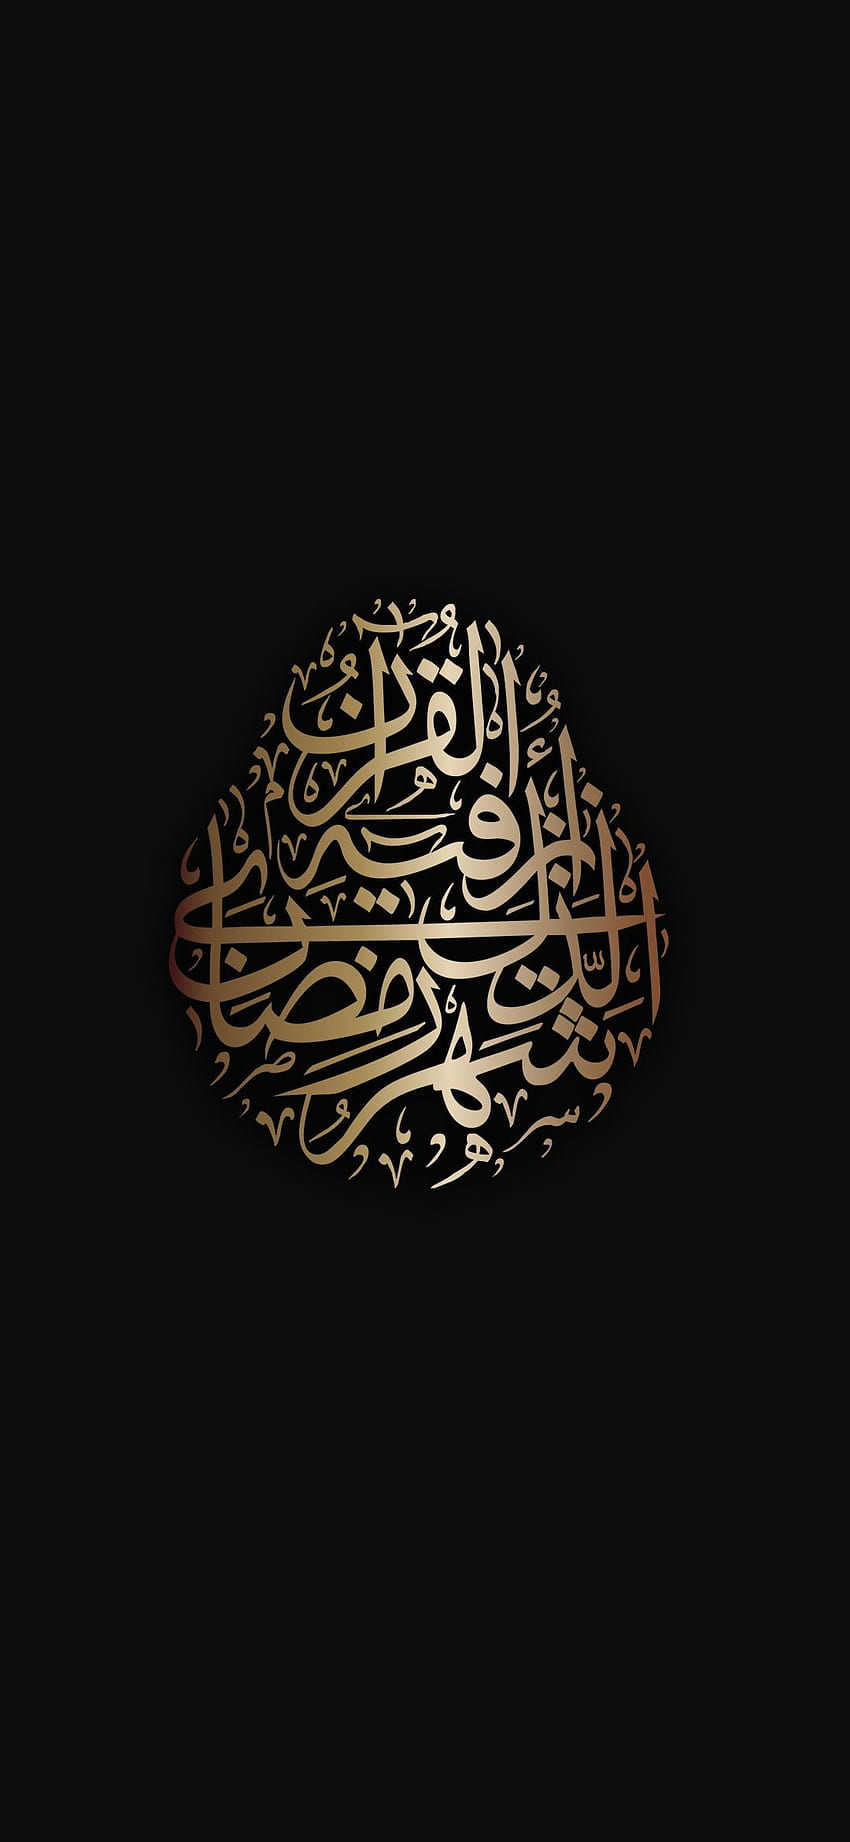 Sticker Aura Subhanallah Alhamdulillah Allahuakbar Islamic Multicolor  Graceful Wall Sticker And Mural Size - 81 X 28cm